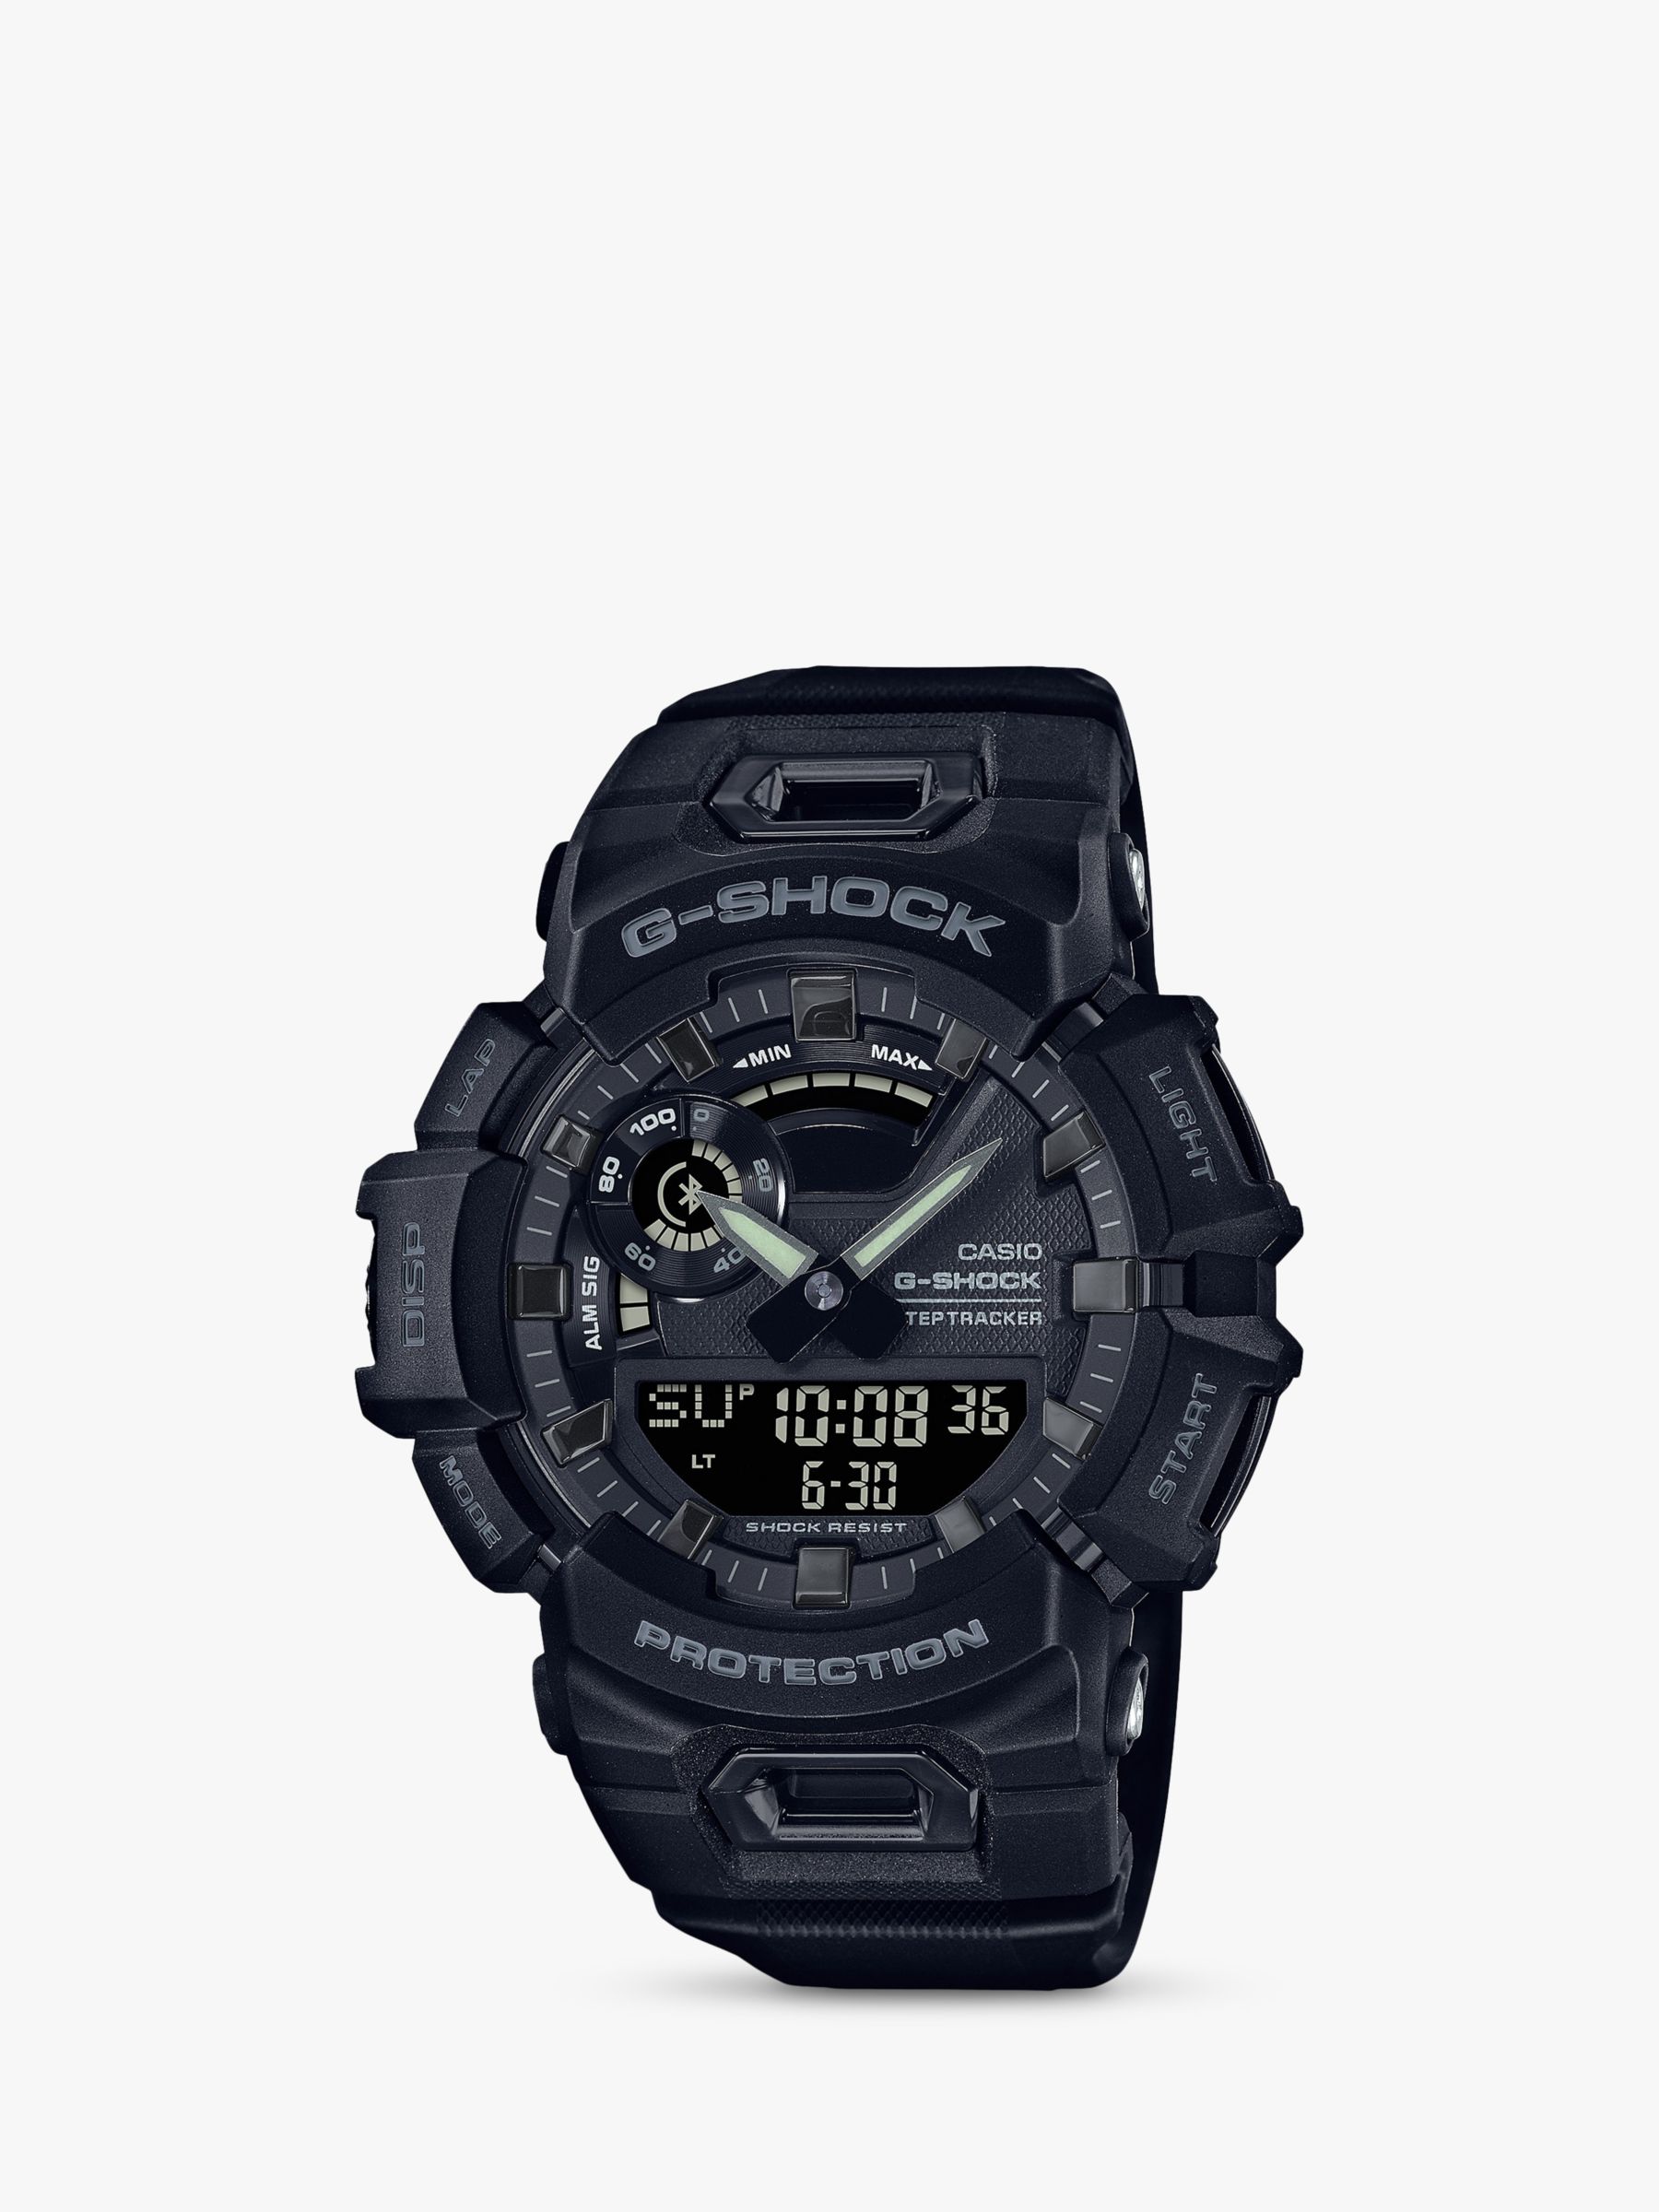 Casio Men's G-Shock Resin Strap Smart Link Watch, Black Gba-900